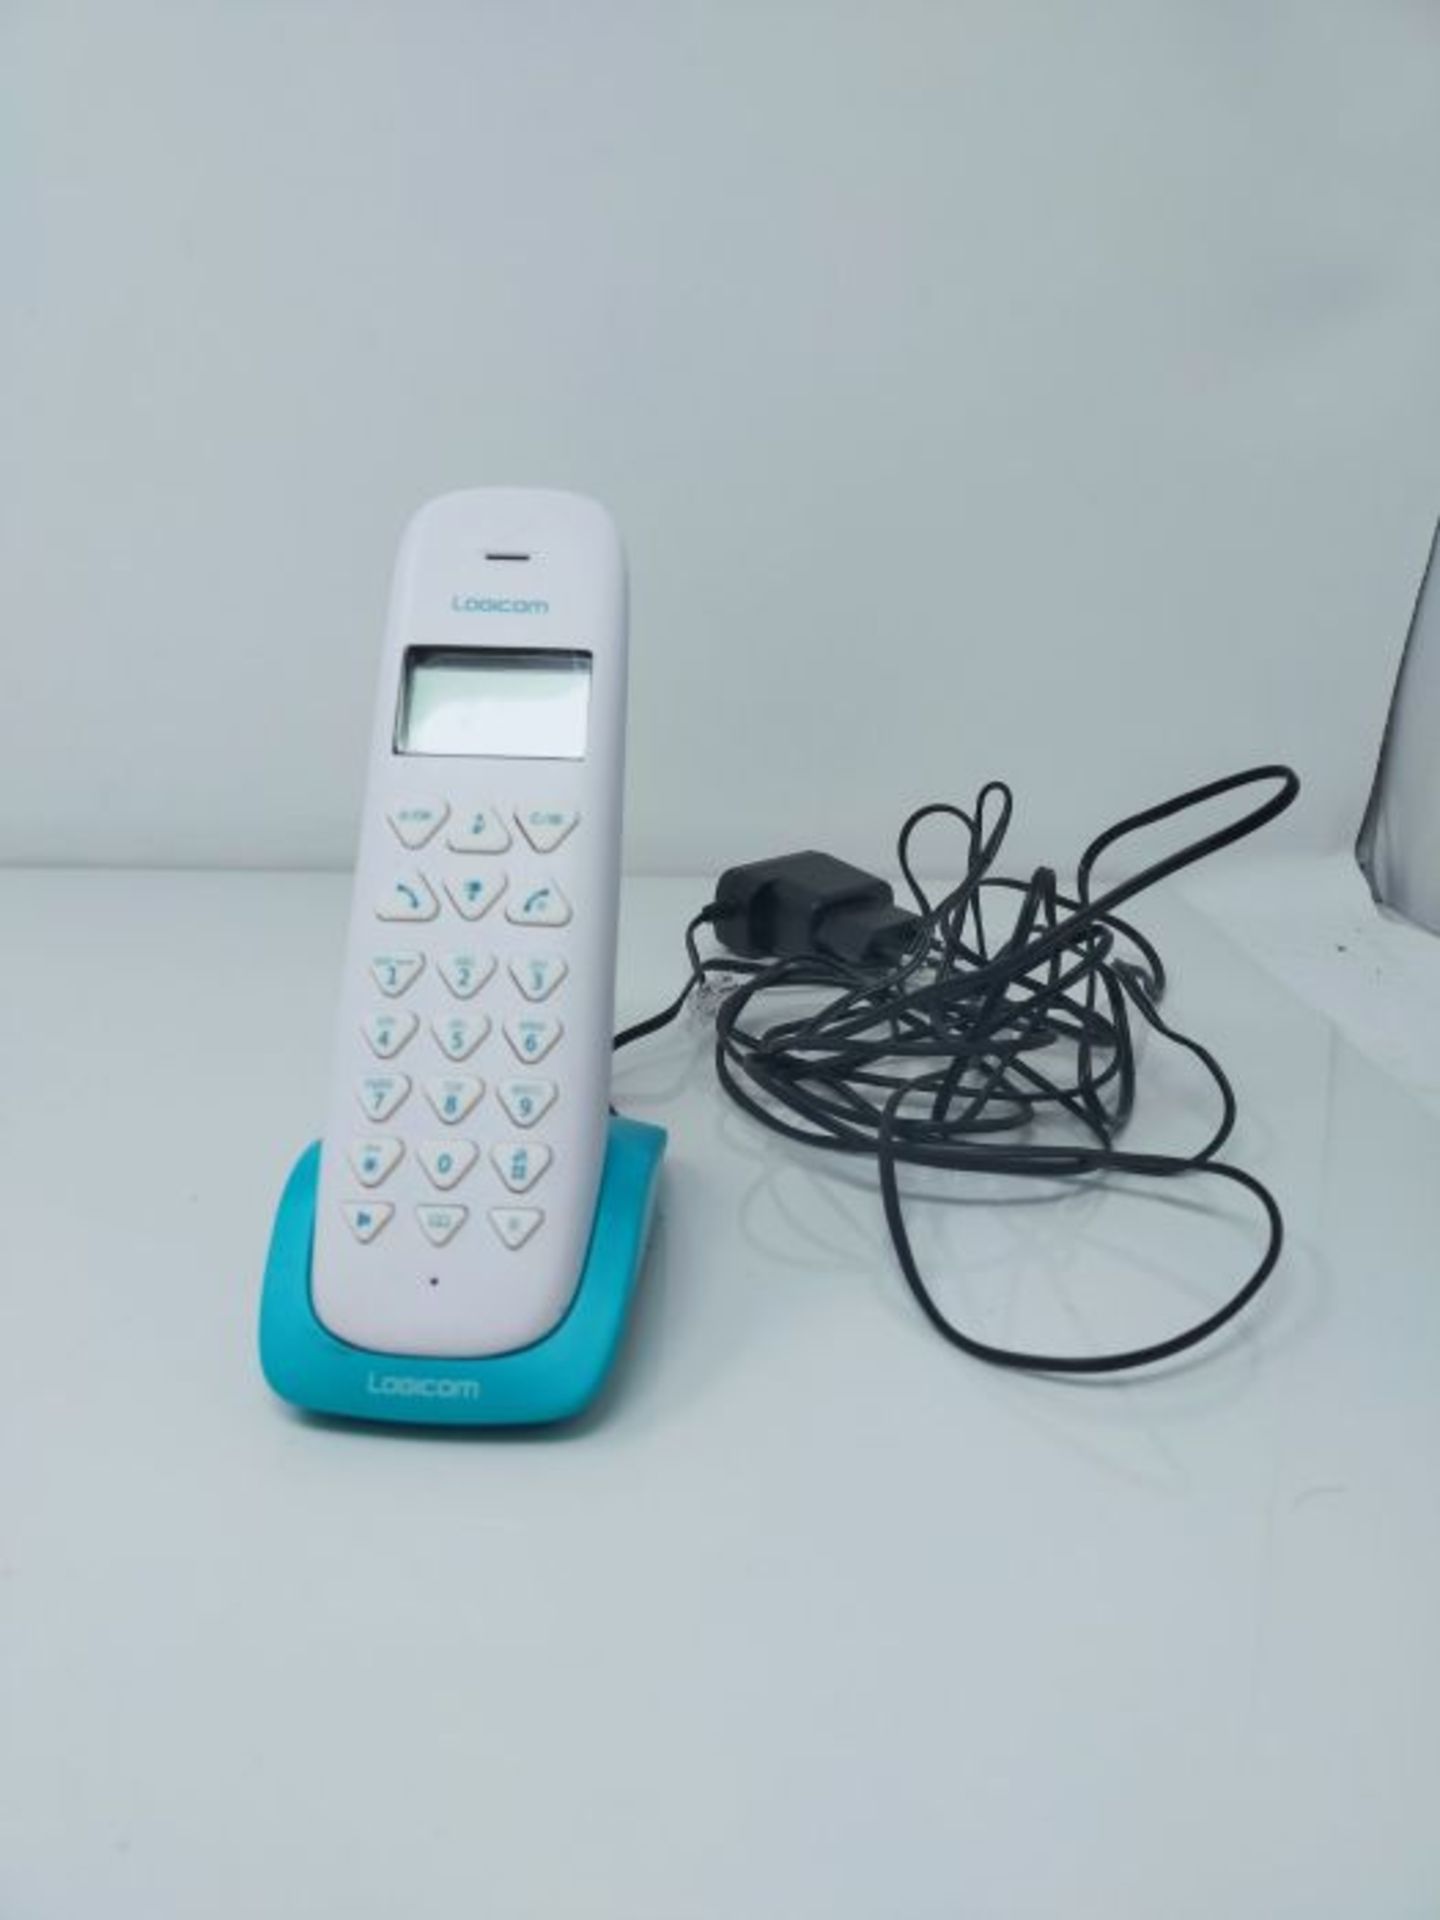 LOGICOM Cordless phone Vega 150 Solo T rkis without answering machine - Image 2 of 2